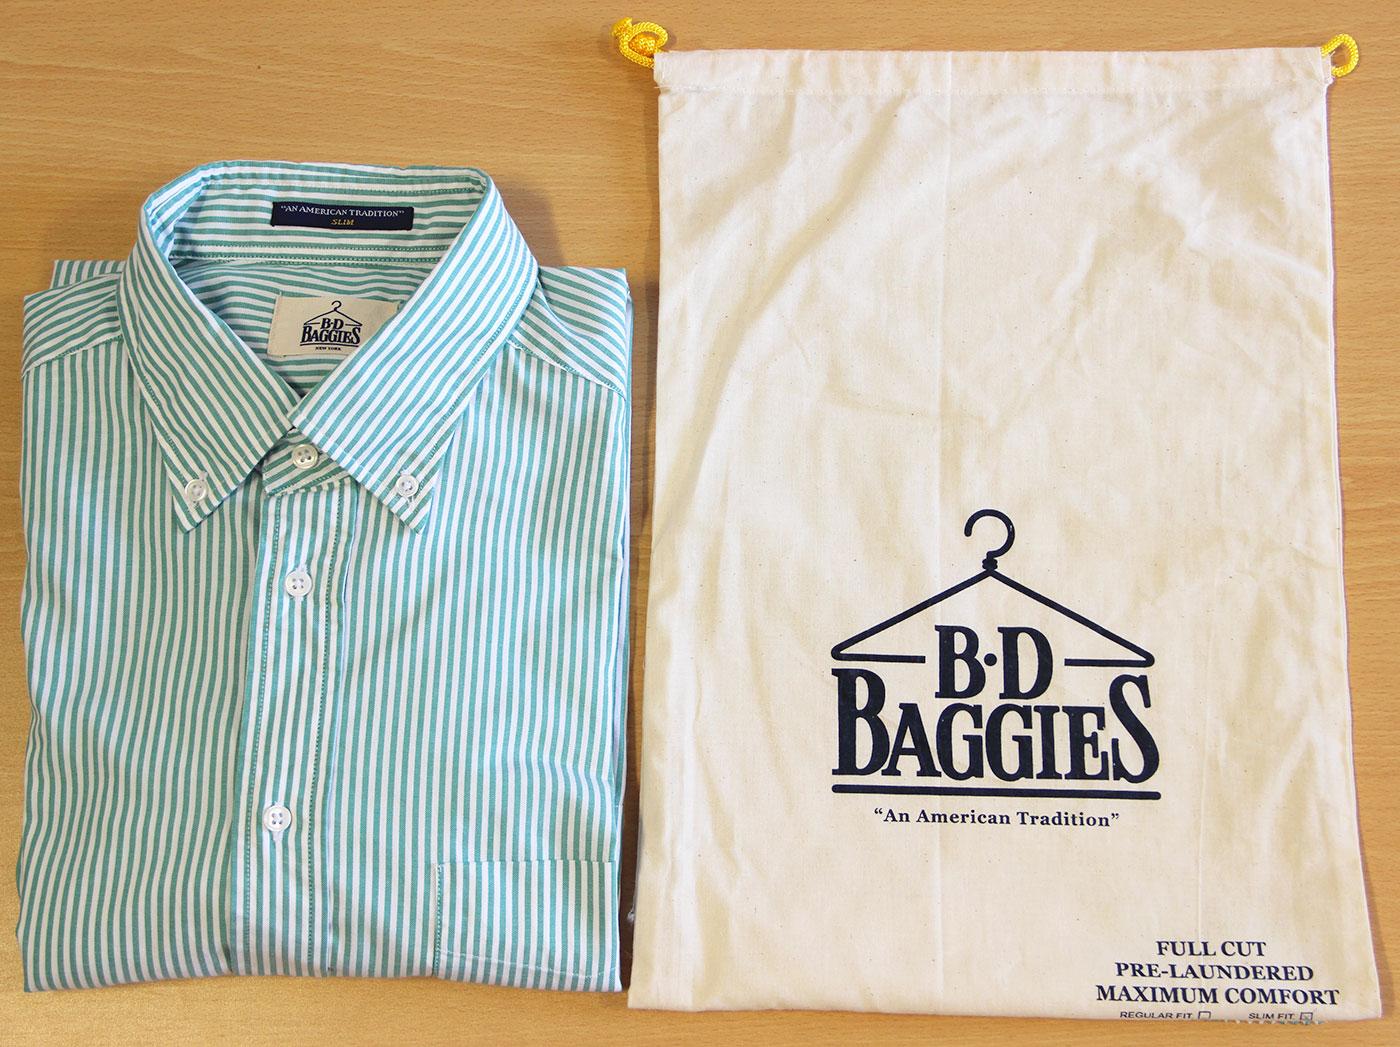 klein Haringen Gedragen B D BAGGIES Dexter Retro Mod Slim Fit Bengal Stripe Shirt Green